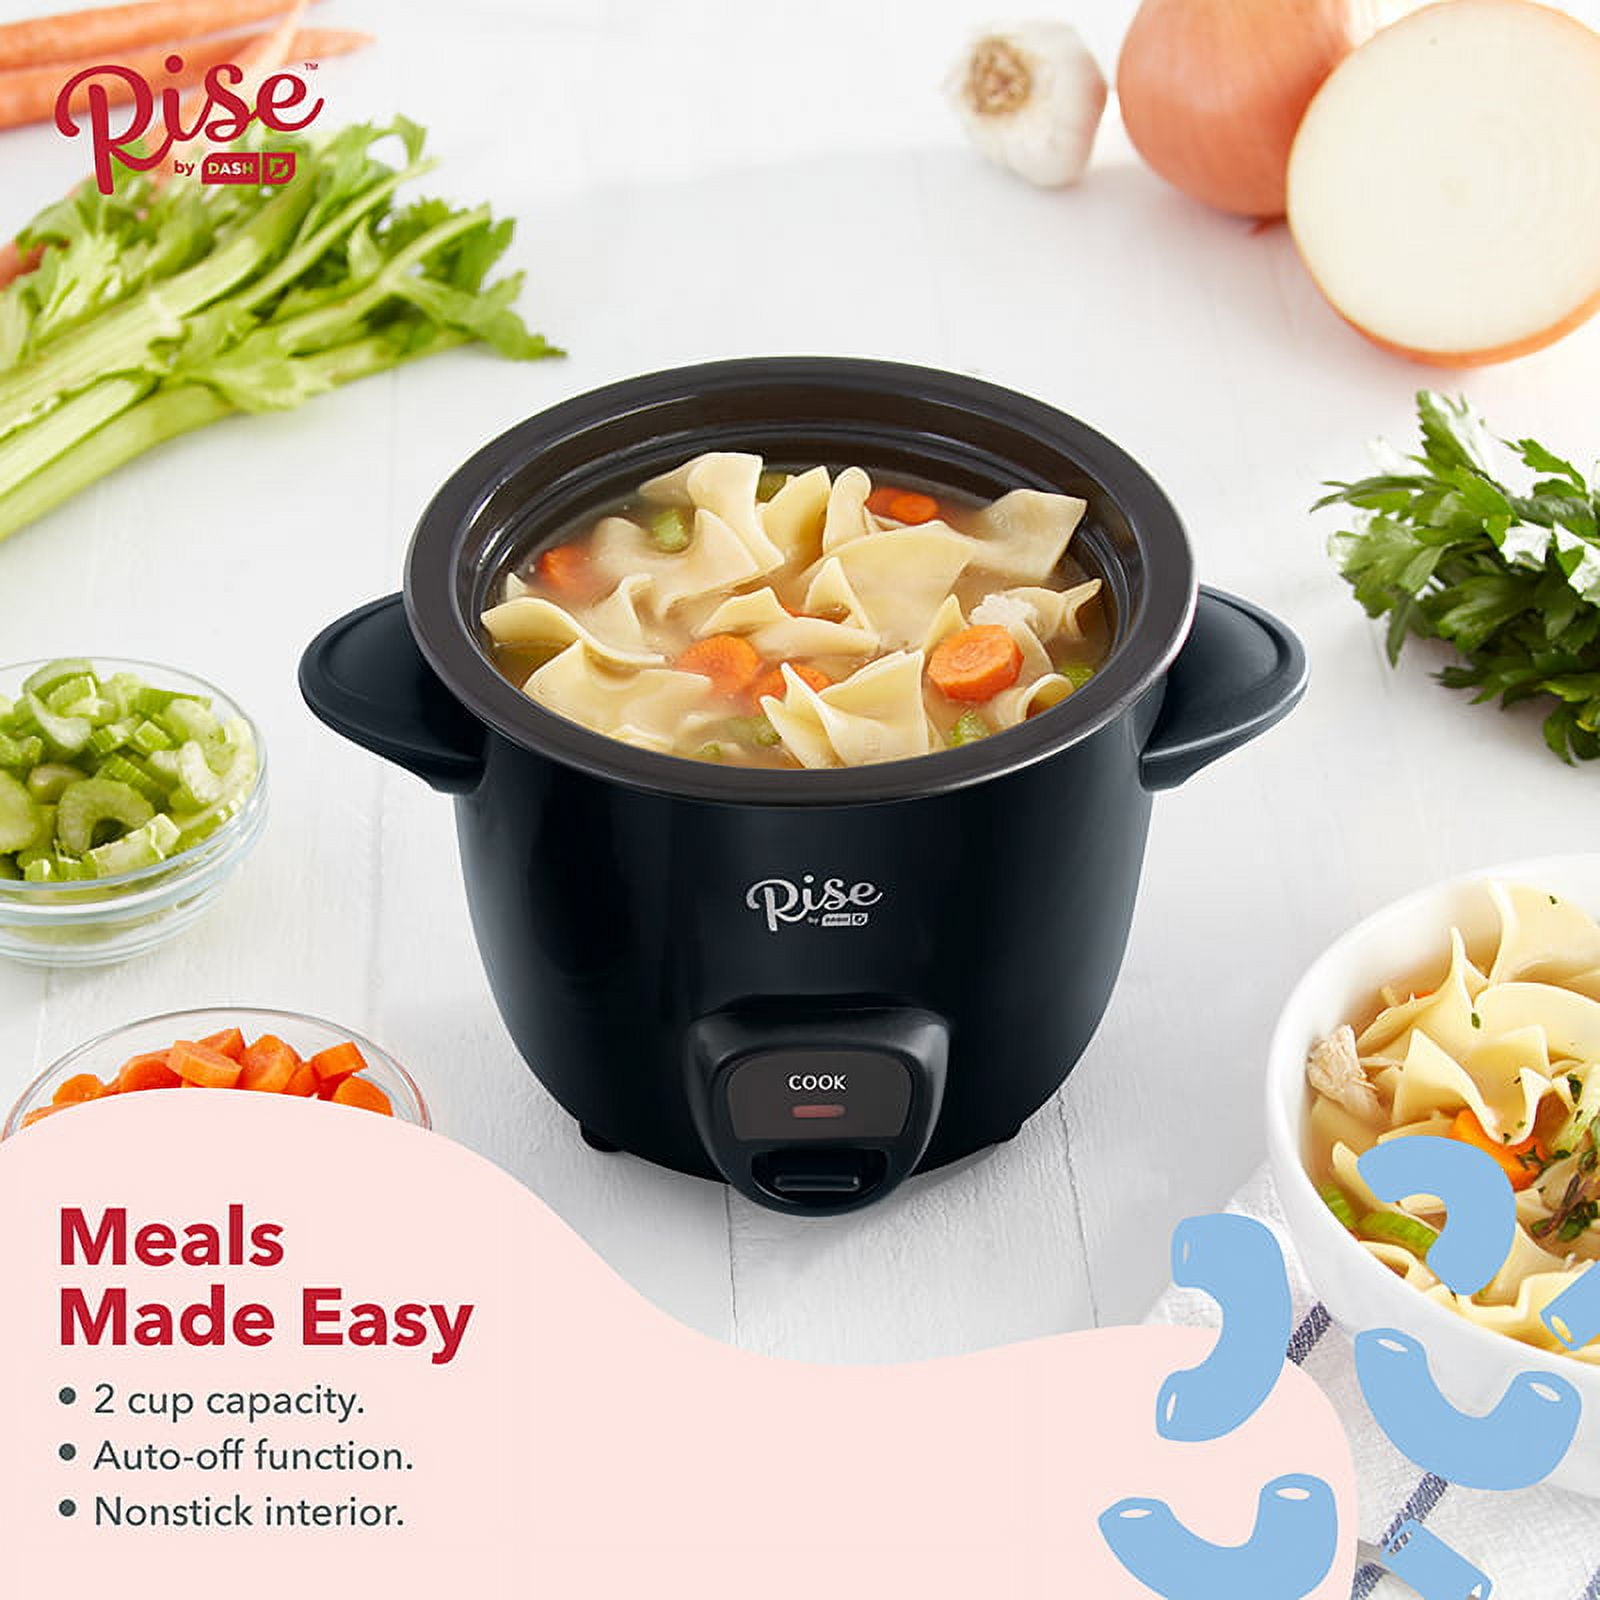  Koplex Easy & Multifunctional Rice Cooker Steam 2L  Pot/Dishwasher Safe, Non-Stick, Non-Toxic & BPA Free/Dozens of Tasty &  Healthy Meals in Minutes - Rice, Oats, Veggies, Pasta, Ramen, Quinoa & More